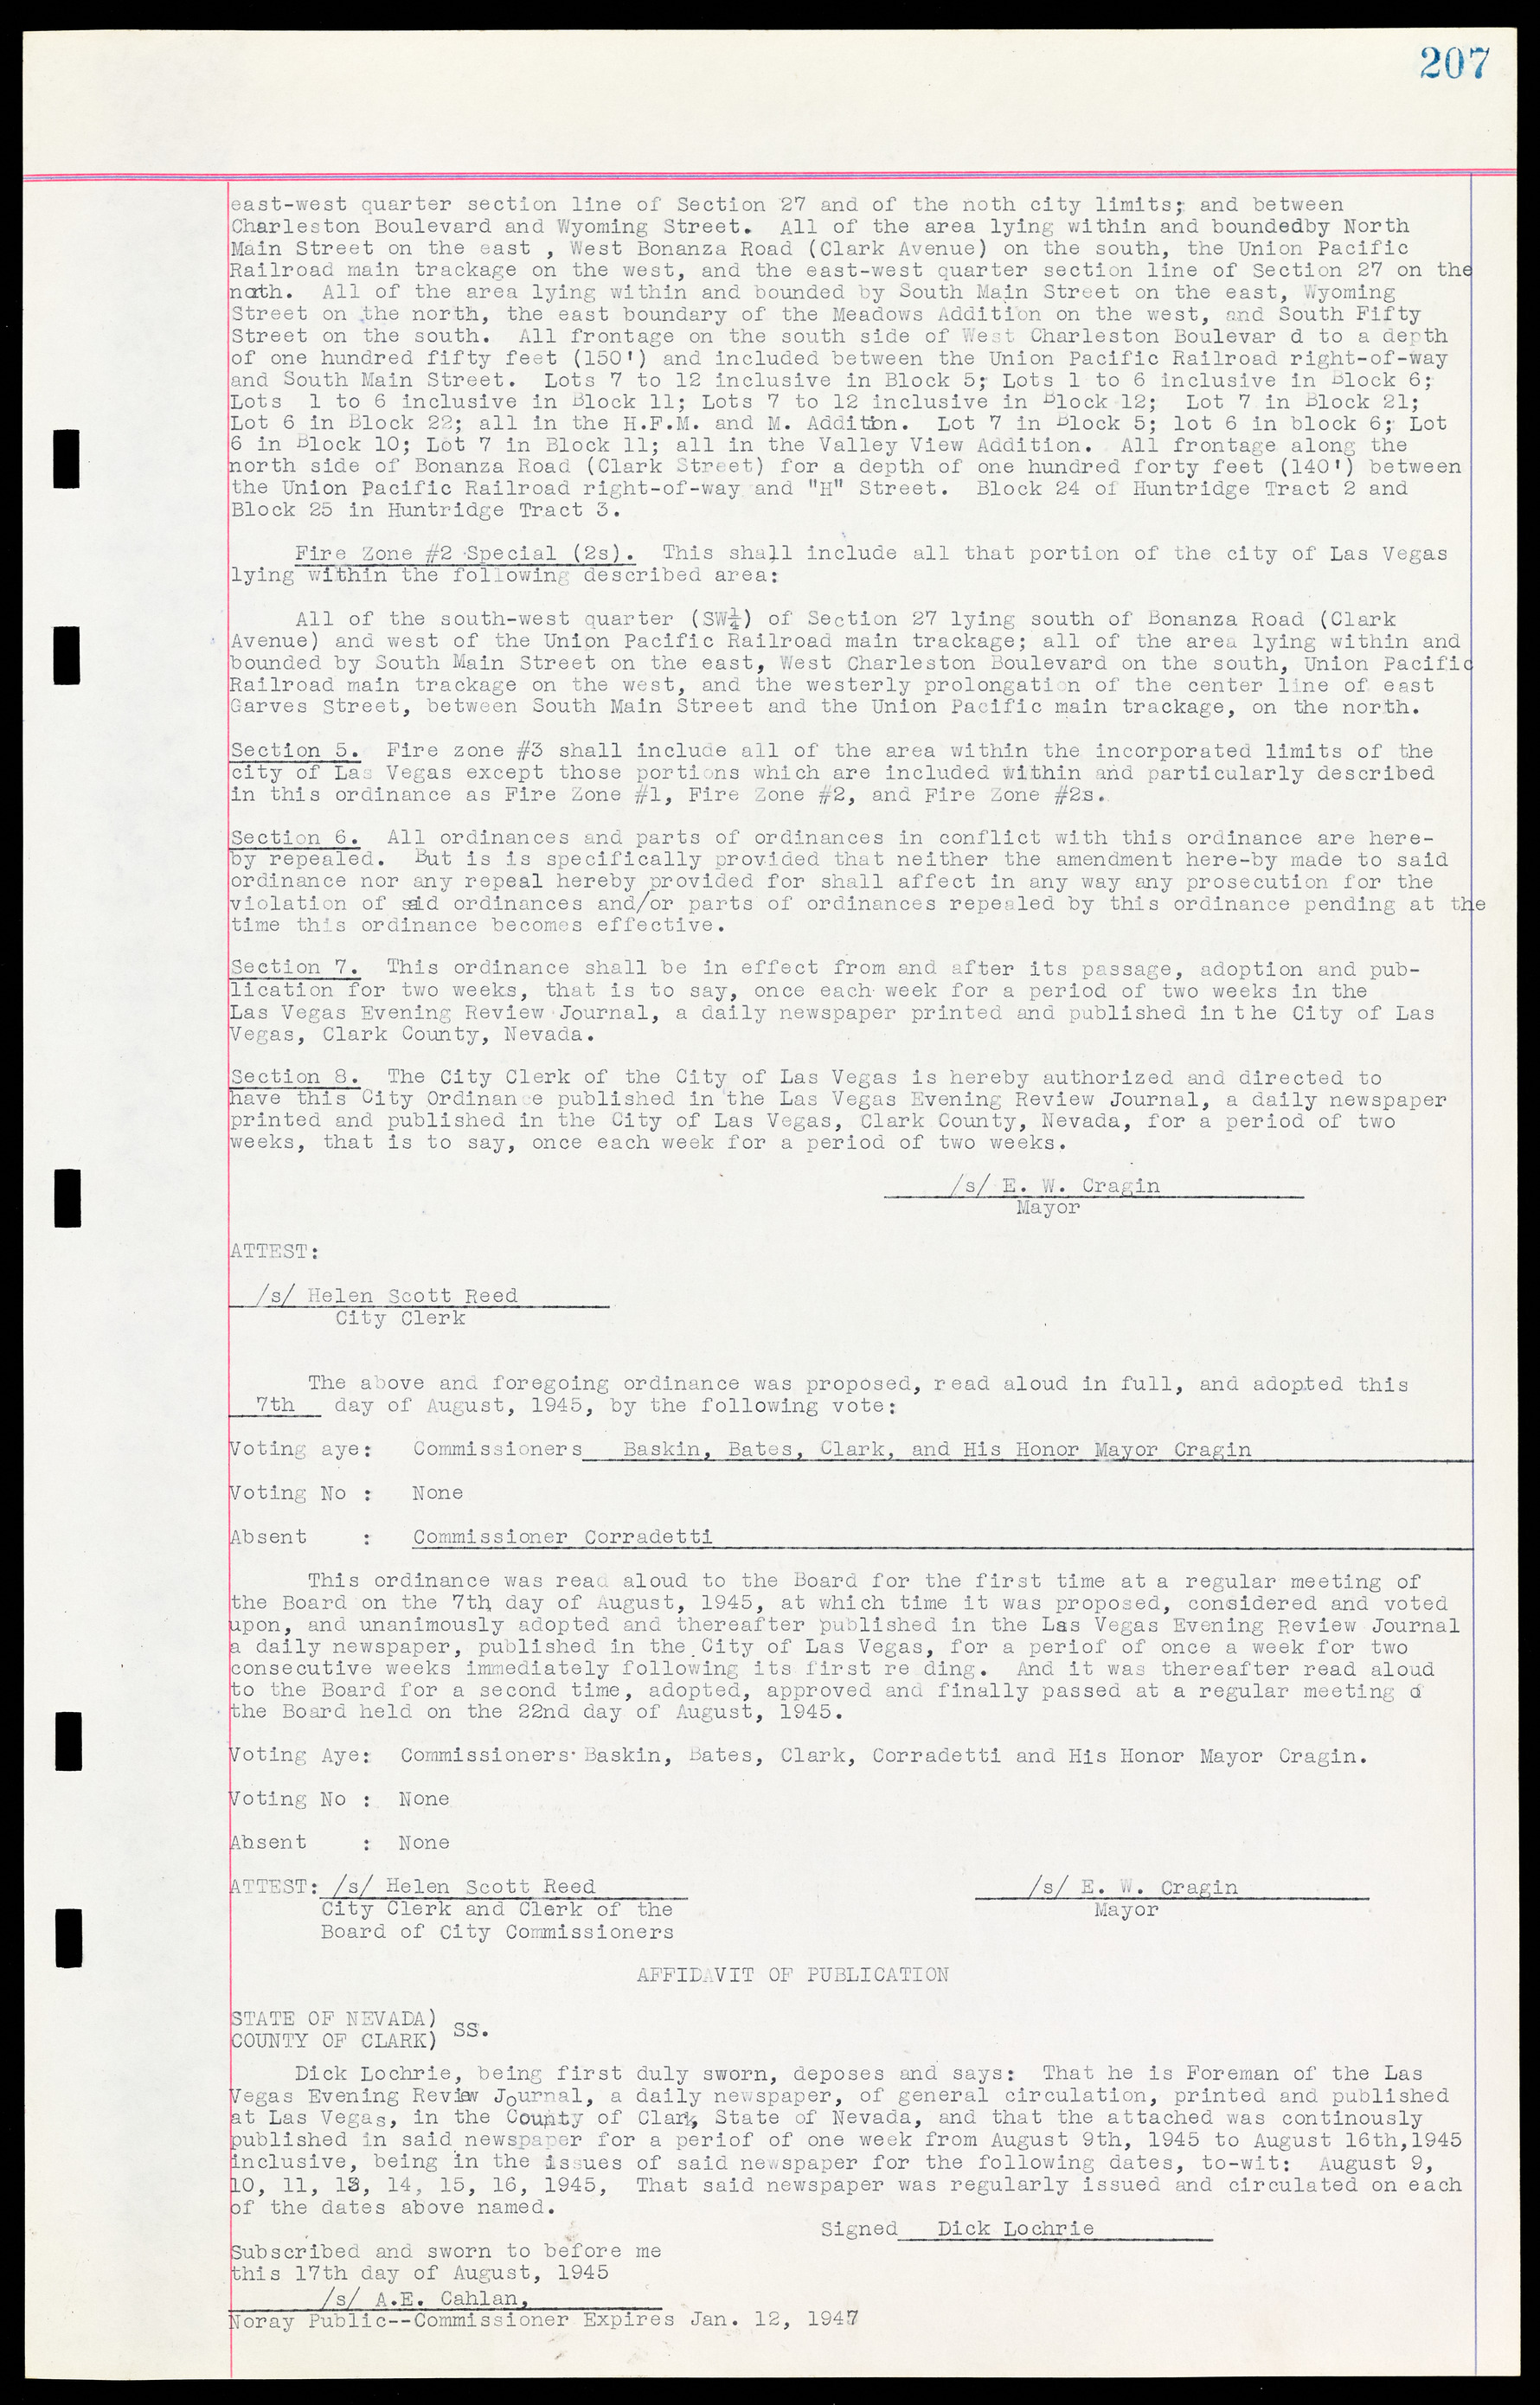 Las Vegas City Ordinances, March 31, 1933 to October 25, 1950, lvc000014-236